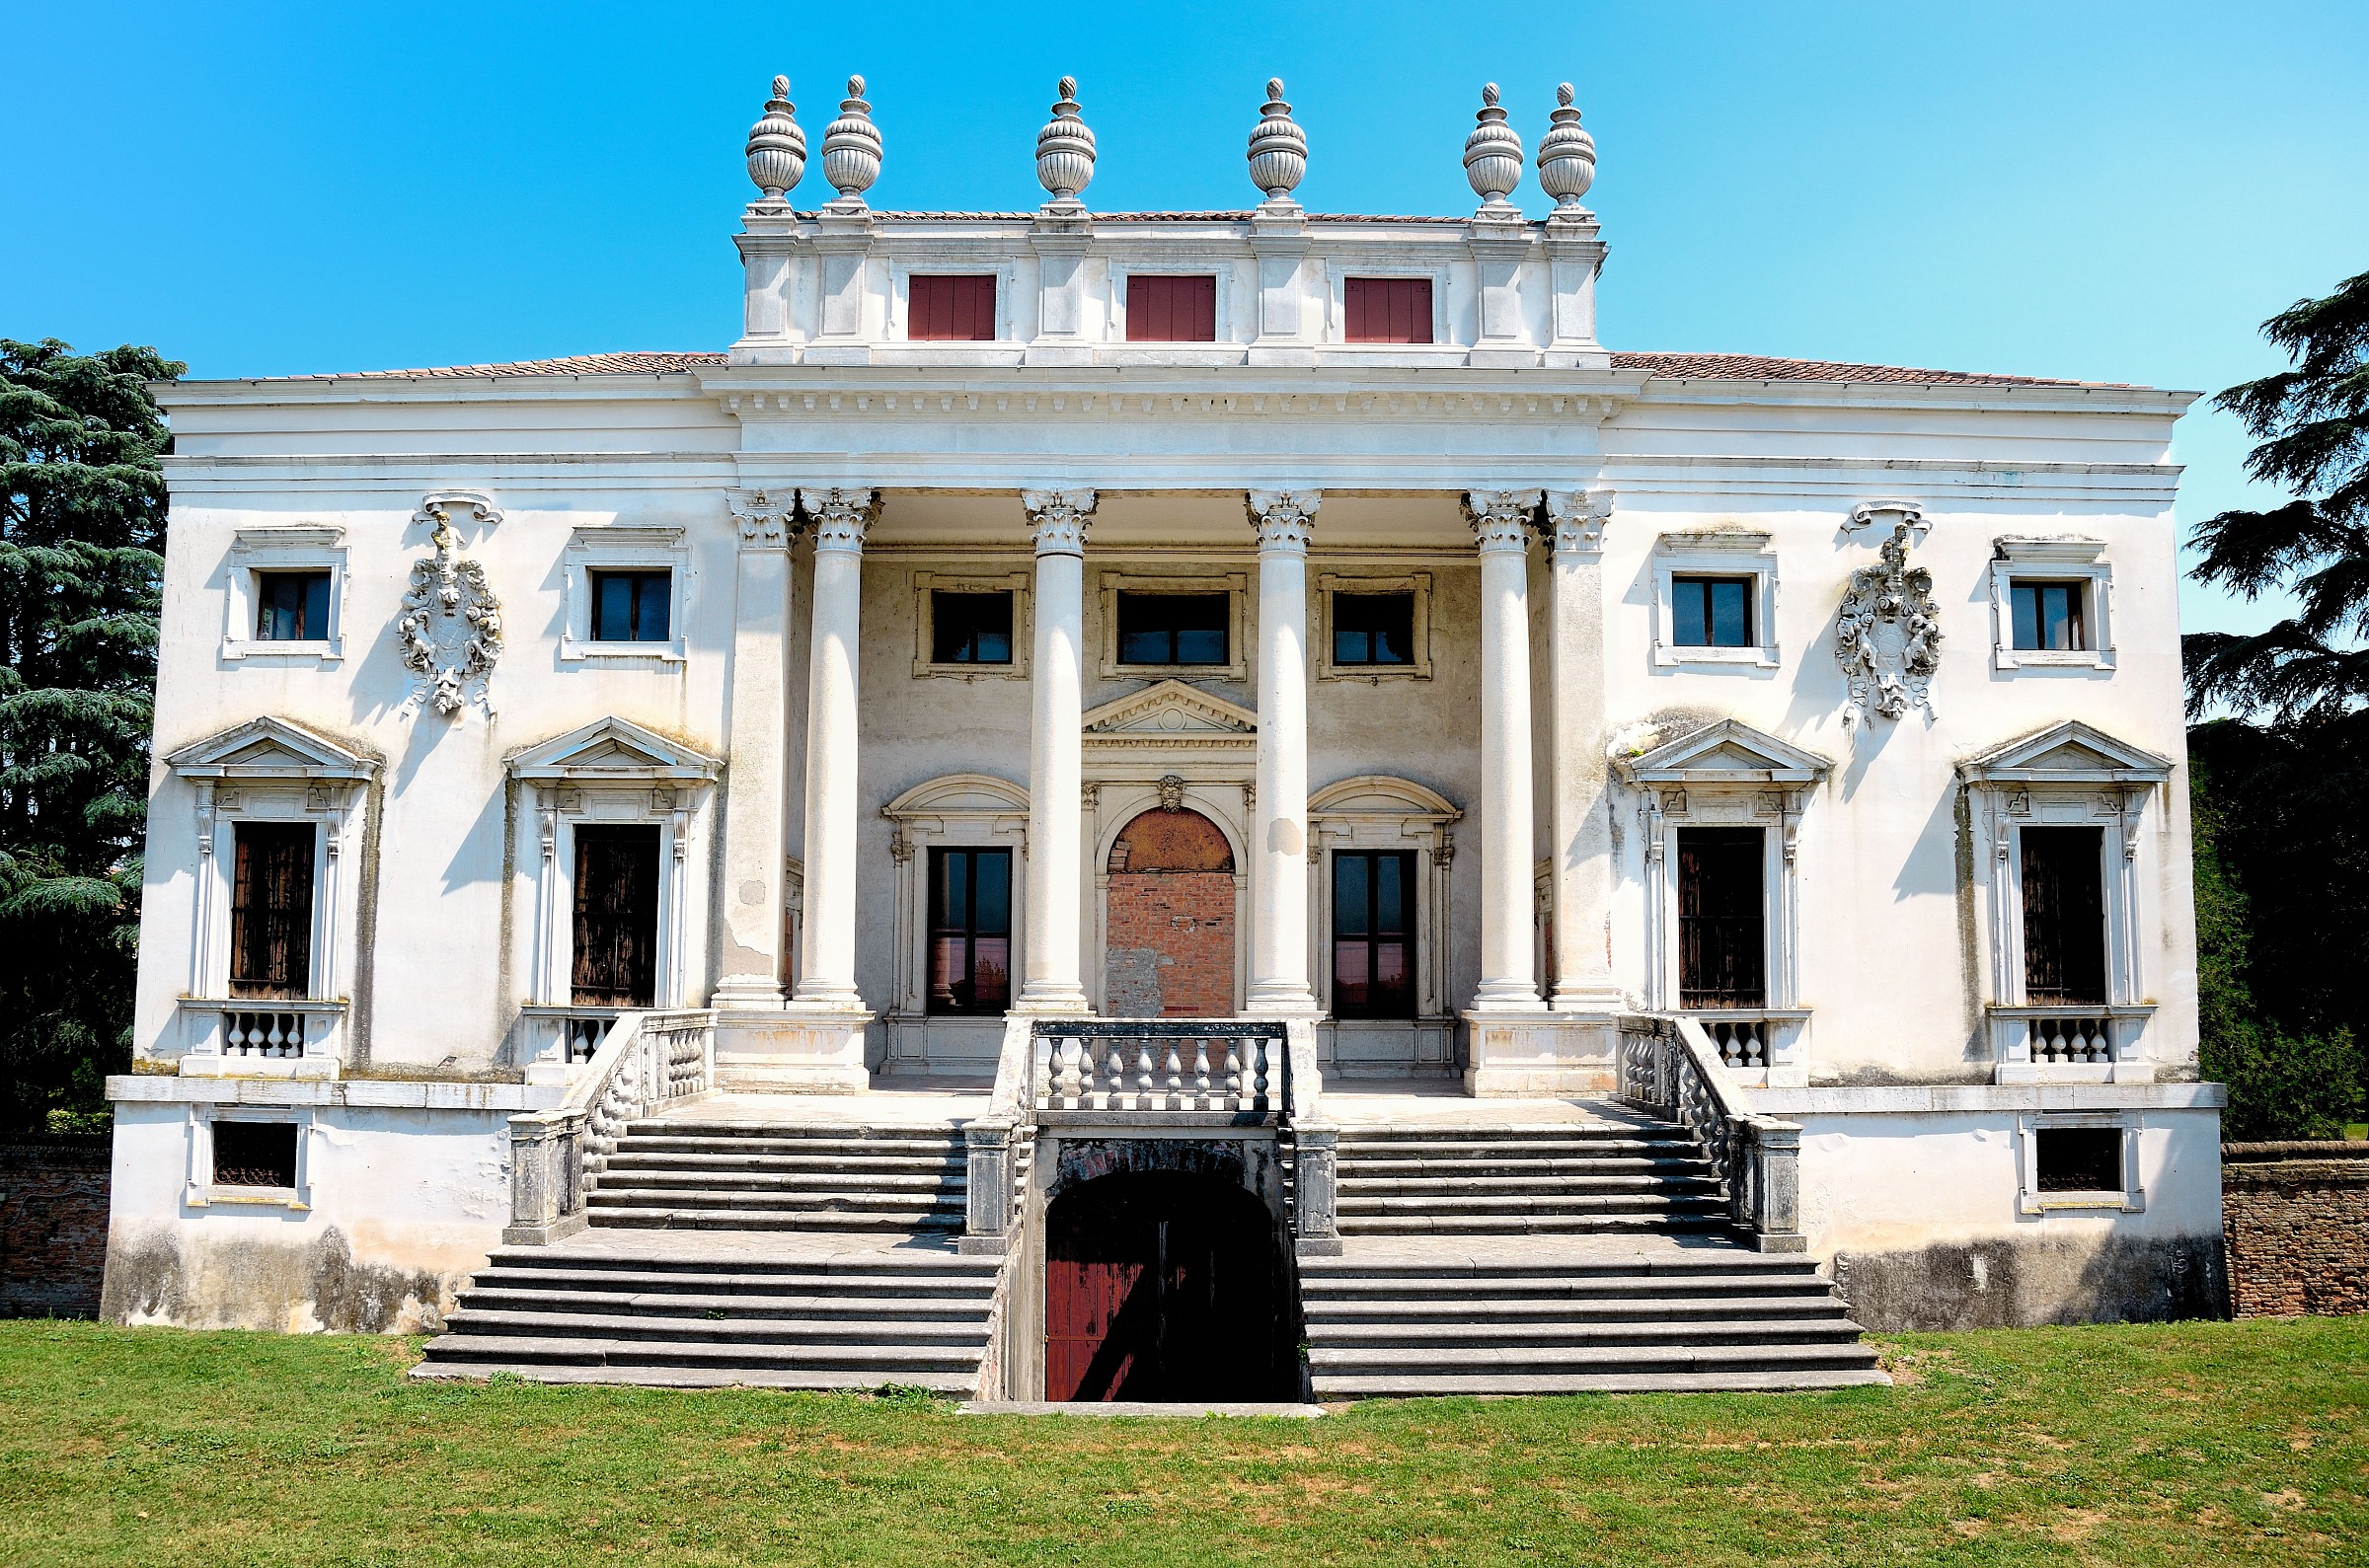 Canda (ro) - Villa Nani Mocenigo in 1584...